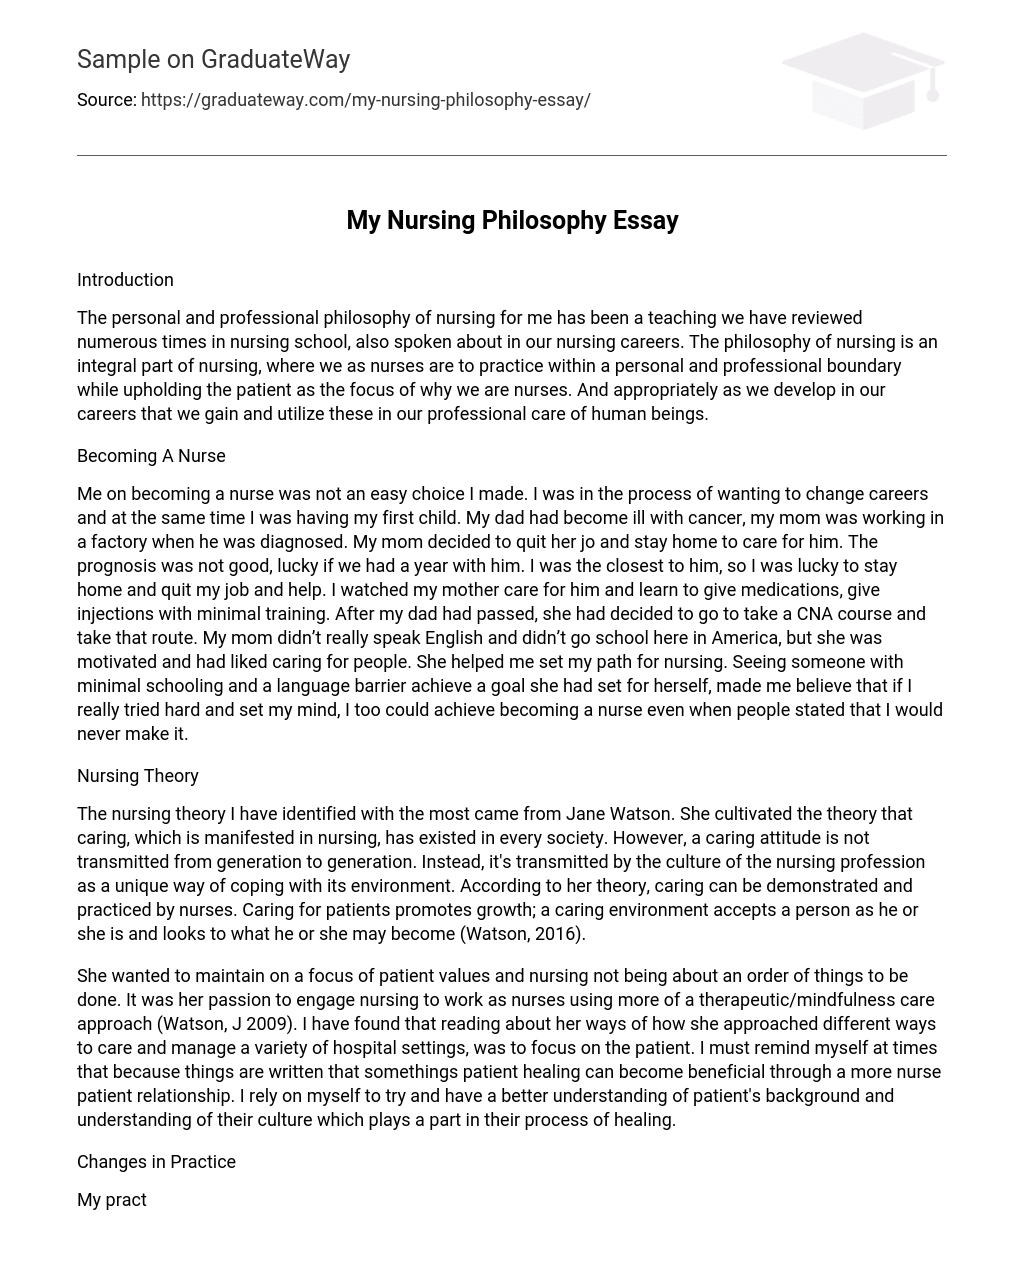 My Nursing Philosophy Essay